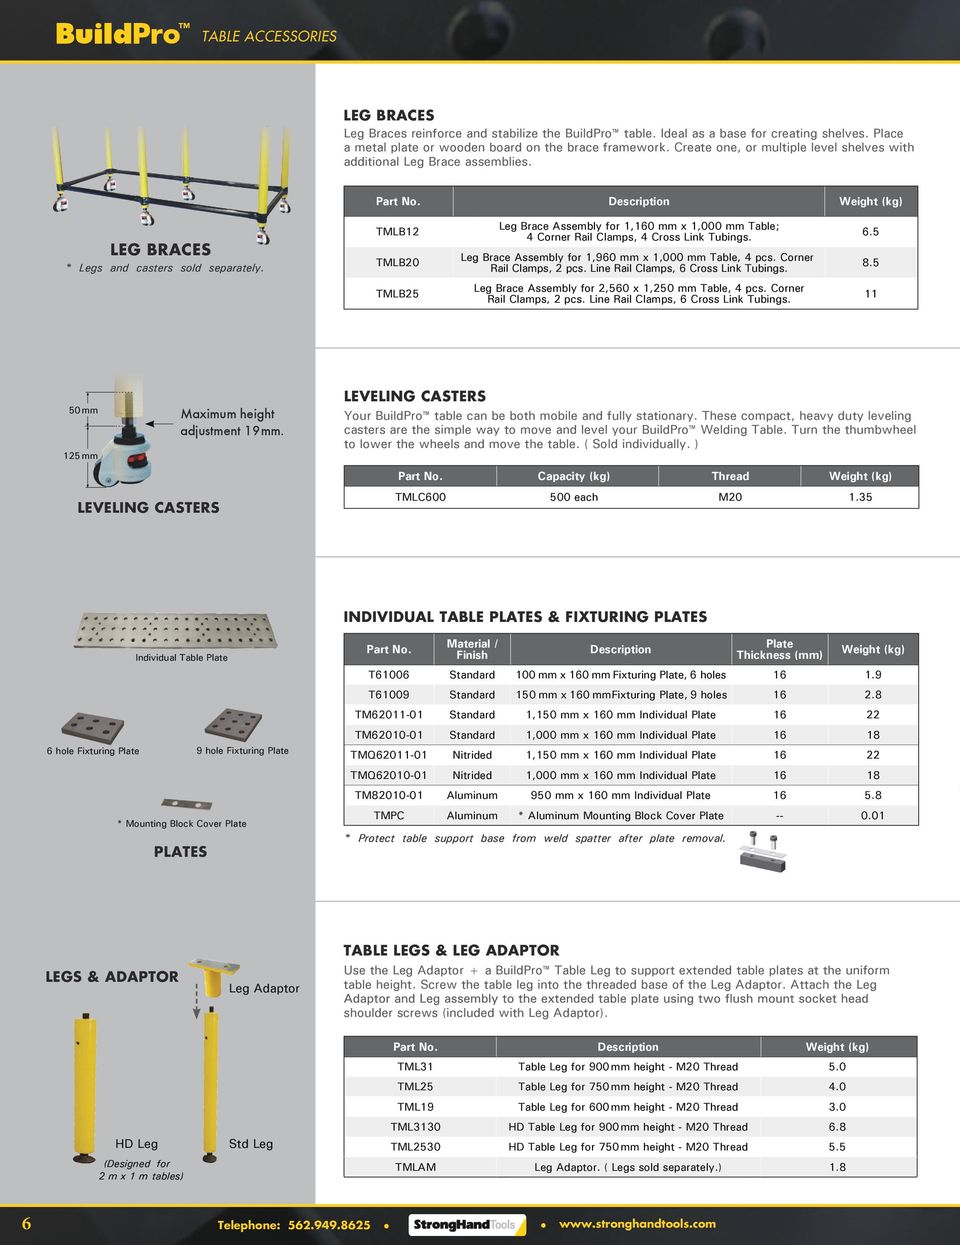 TMLB1 TMLB0 Leg Brace Assembly for 1,160 mm x 1,000 mm Table; Corner Rail Clamps, Cross Link Tubings. Leg Brace Assembly for 1,960 mm x 1,000 mm Table, pcs. Corner Rail Clamps, pcs.